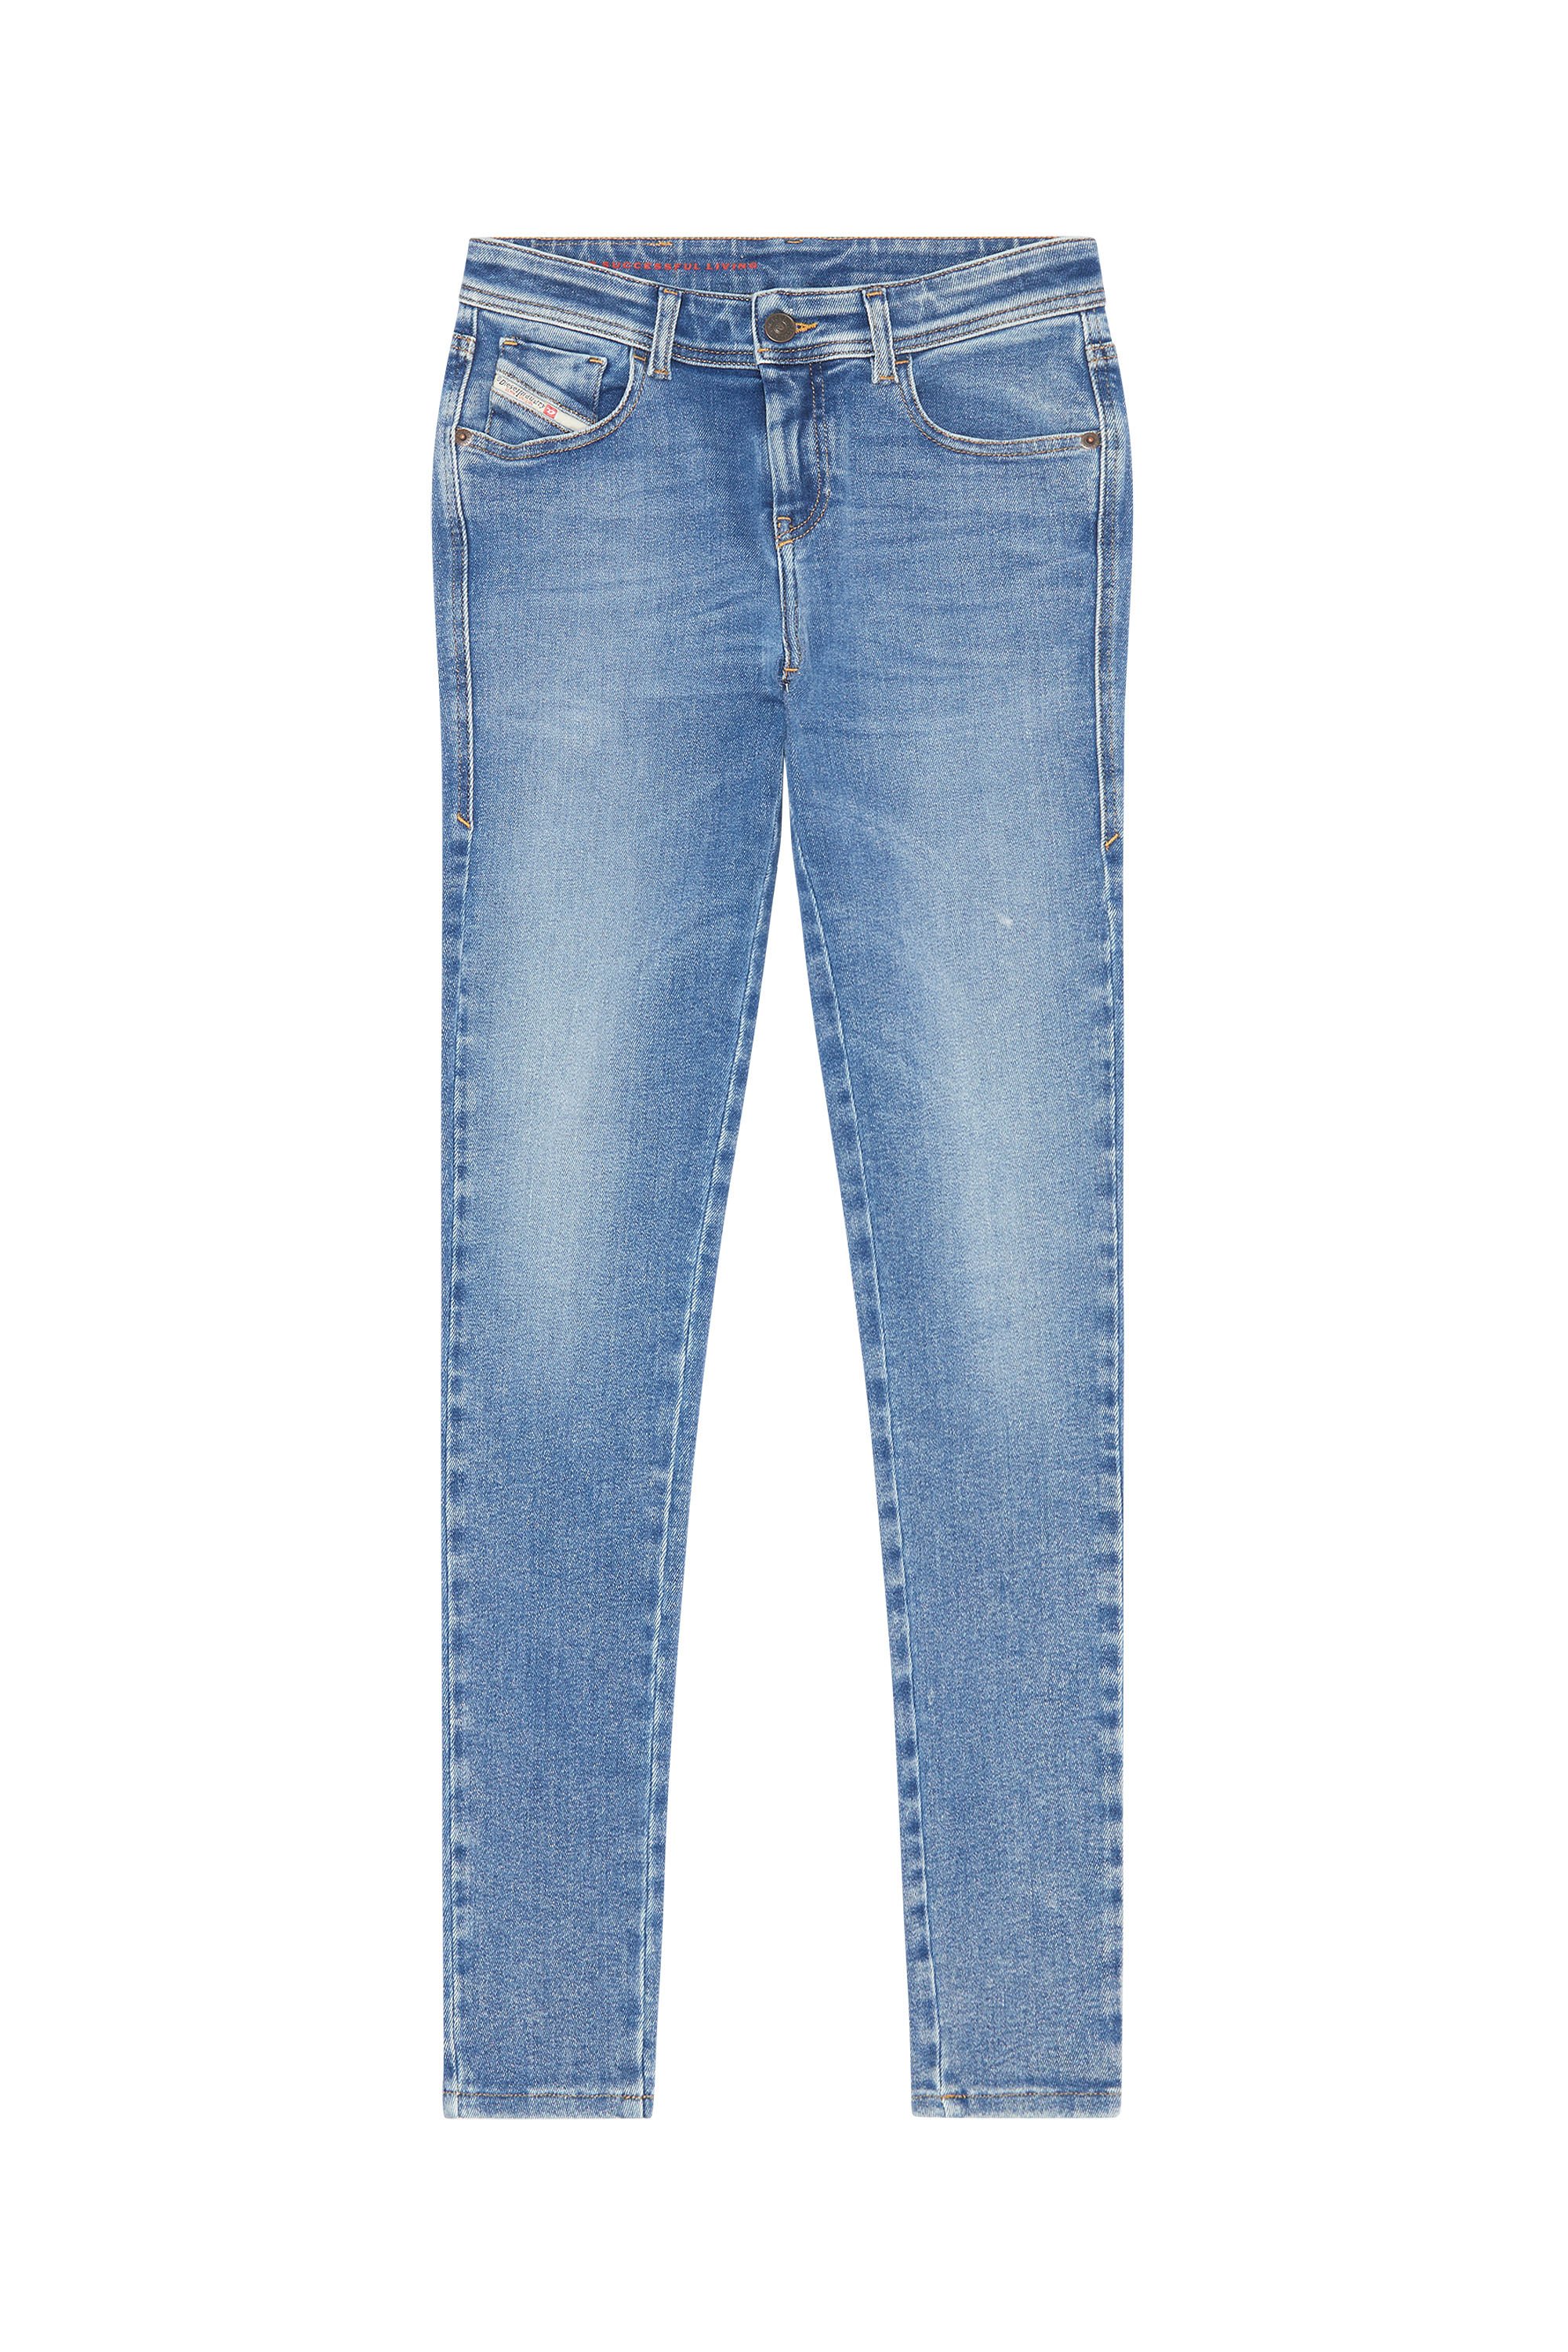 Super skinny Jeans 2017 Slandy 09D62, Medium blue - Jeans